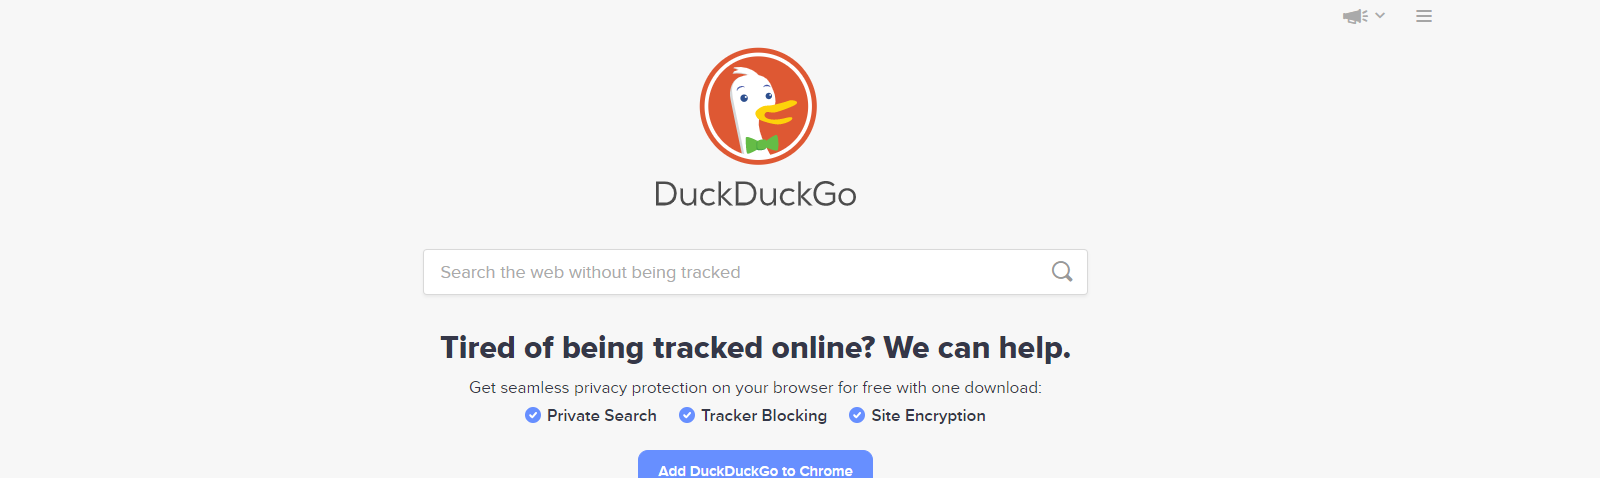 The DuckDuckGo homepage